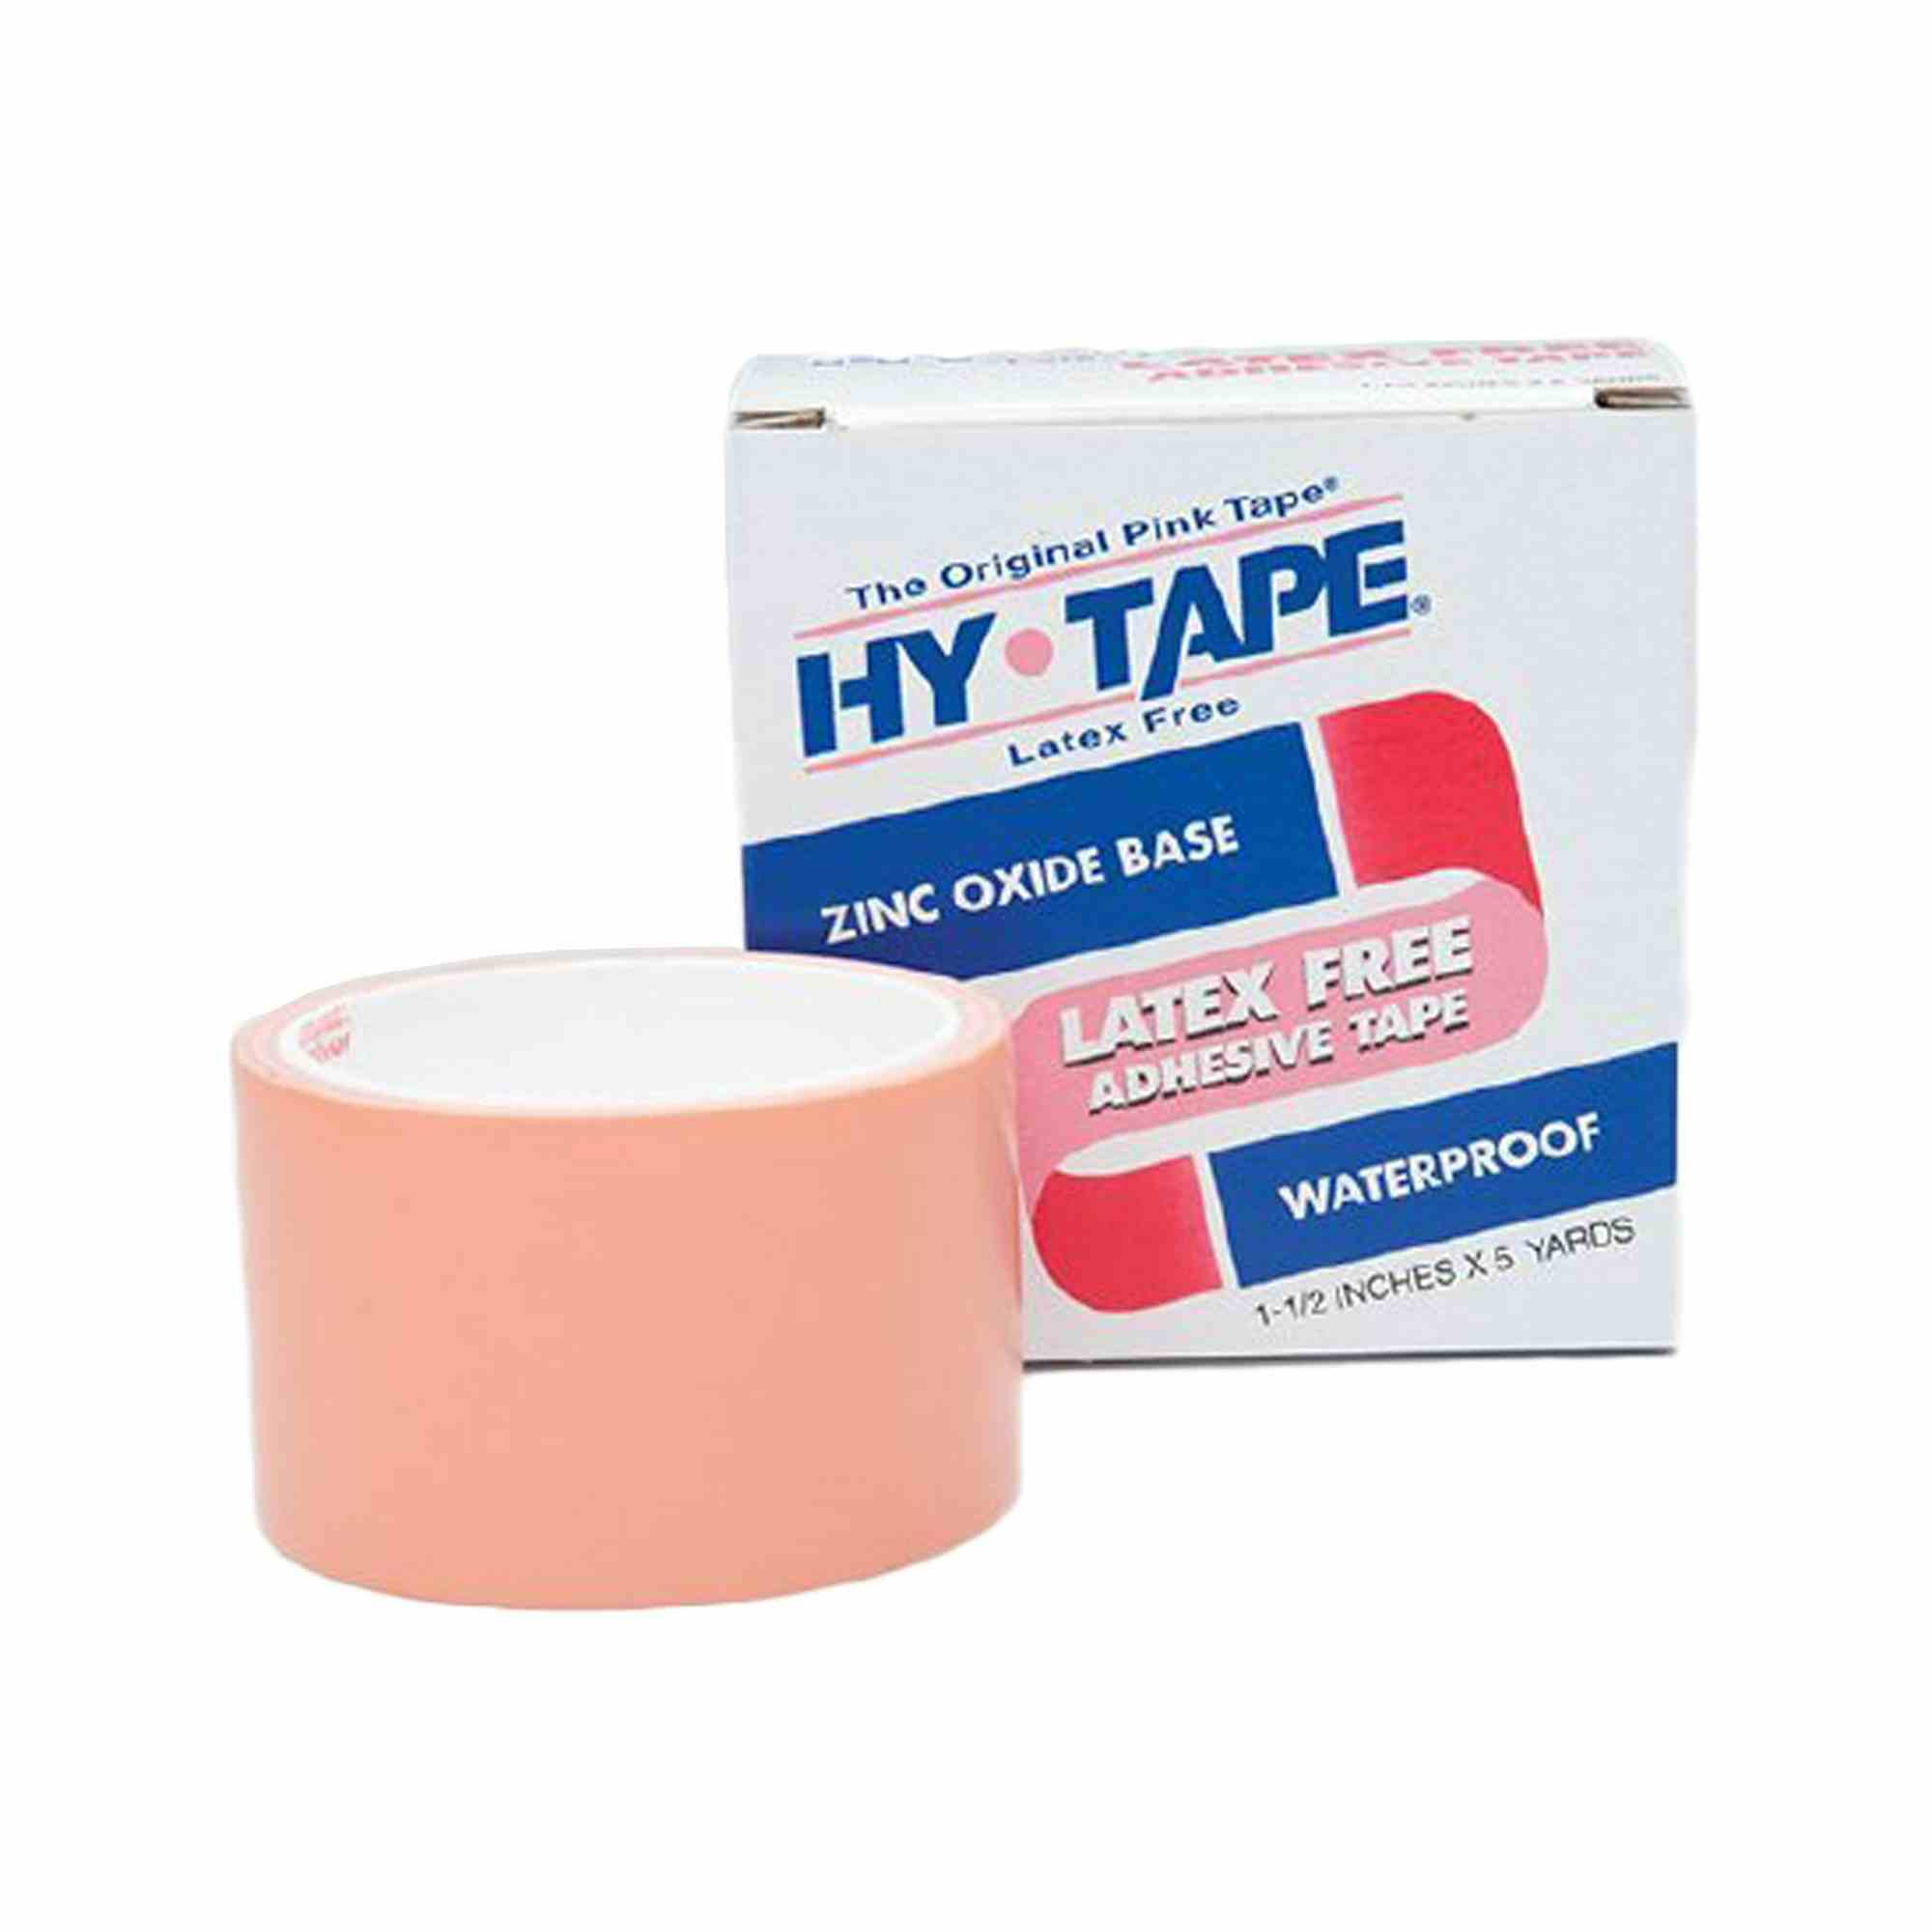 Hy-Tape Latex Free Zinc Oxide-Base Adhesive Tape, Waterproof, 2" X 5 yds, 120BLF, 1 Roll